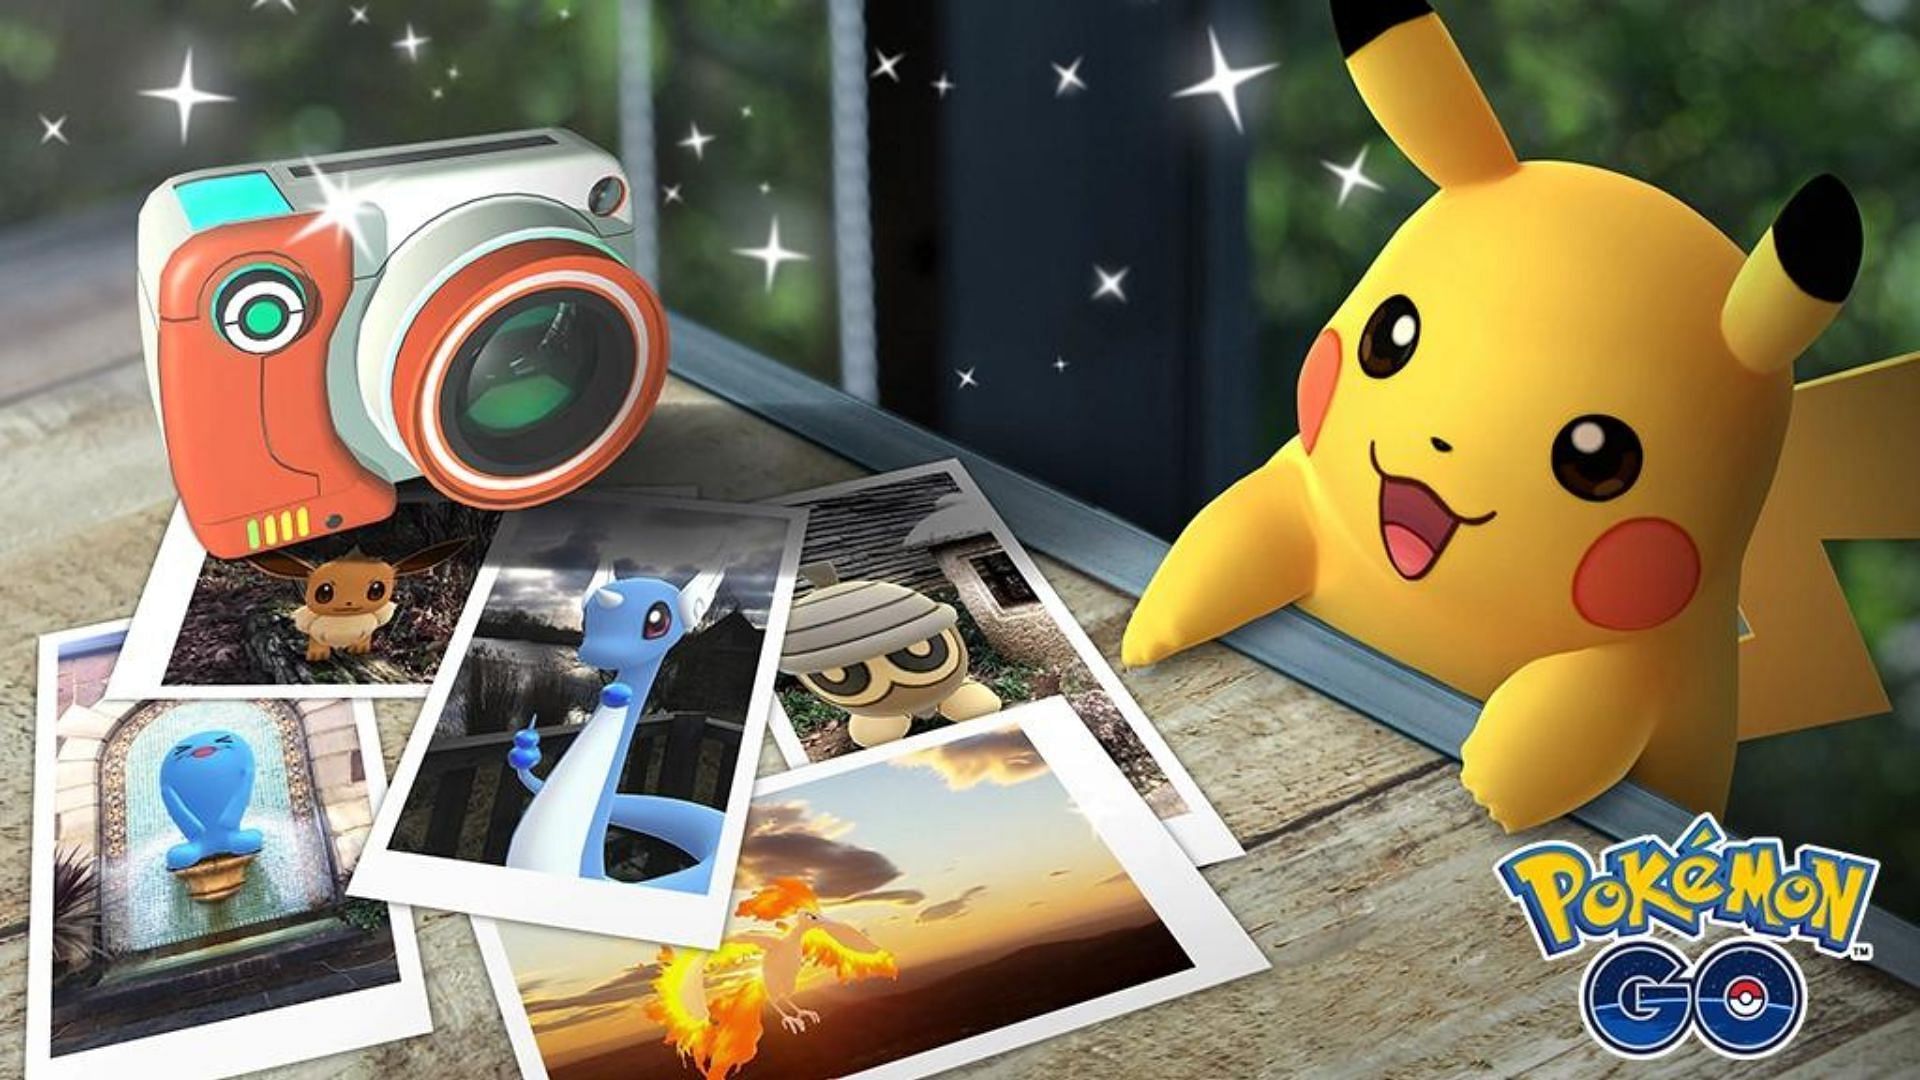 Pikachu taking Snapshot in Pokemon GO